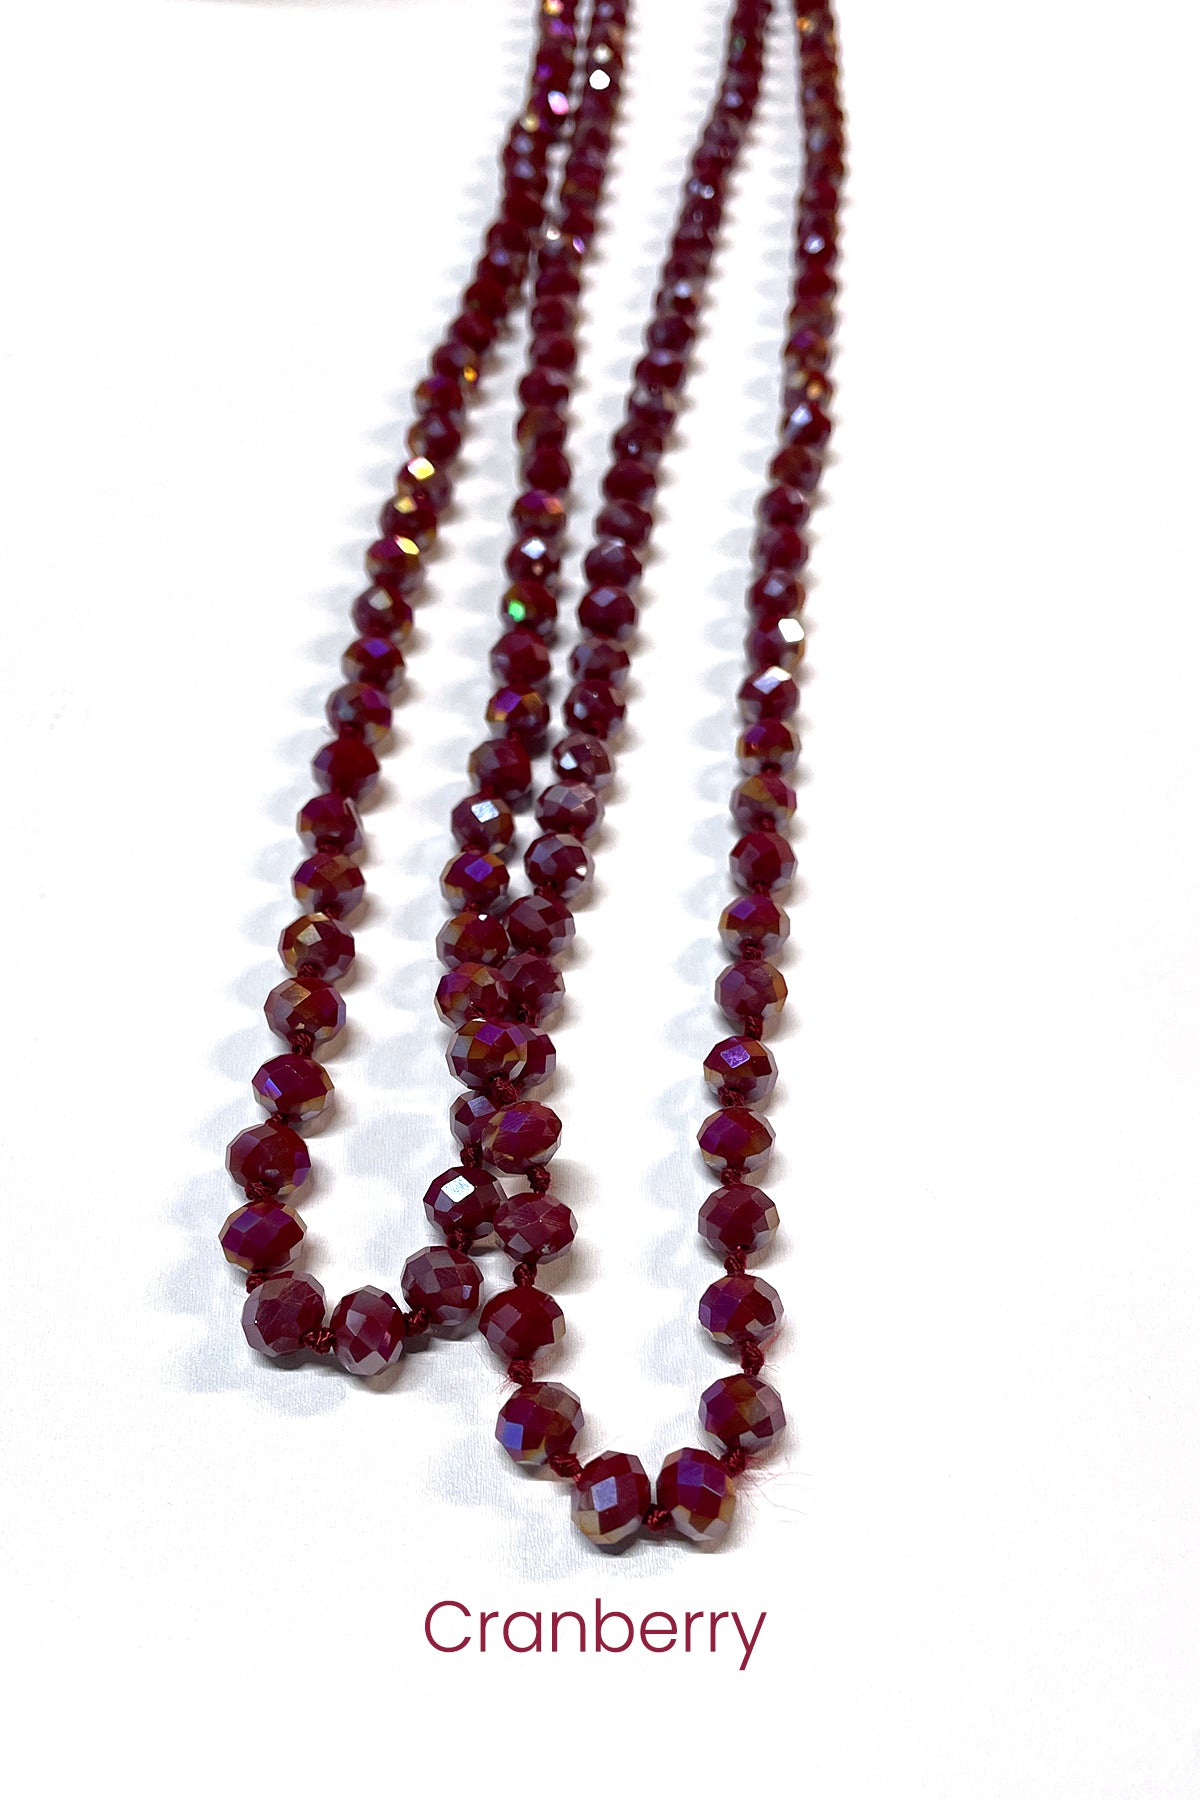 Wrap Necklaces 60" - All Colors jewelry ViVi Liam Jewelry Cranberry 